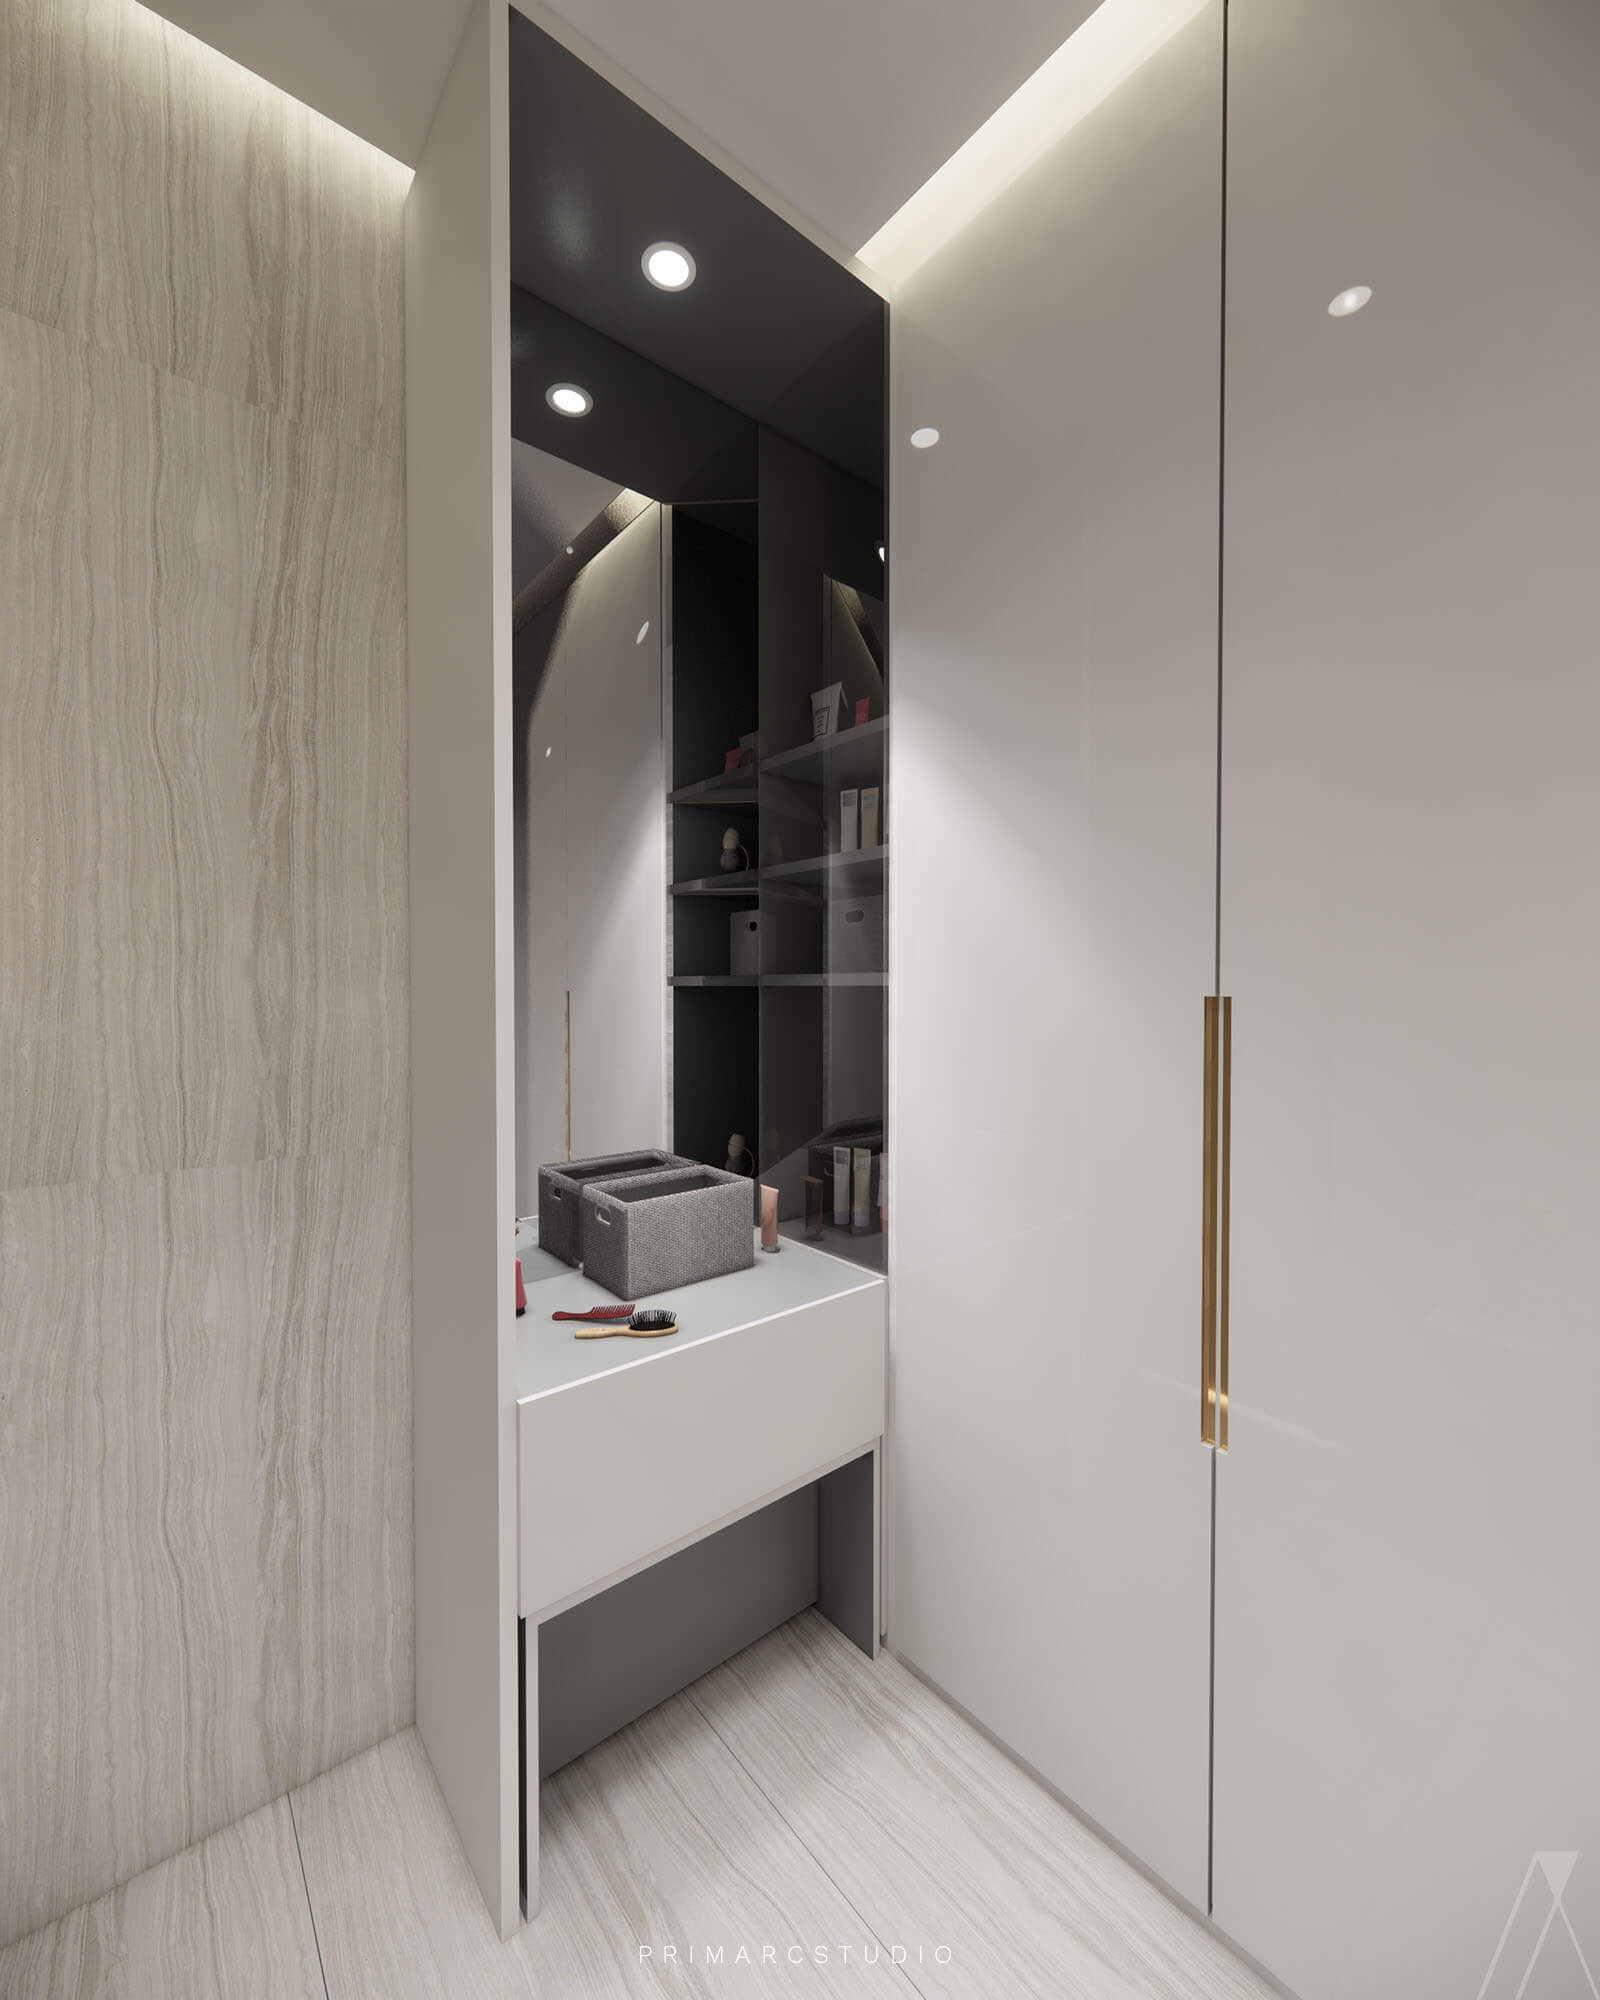 Washroom interior design in neutral colors